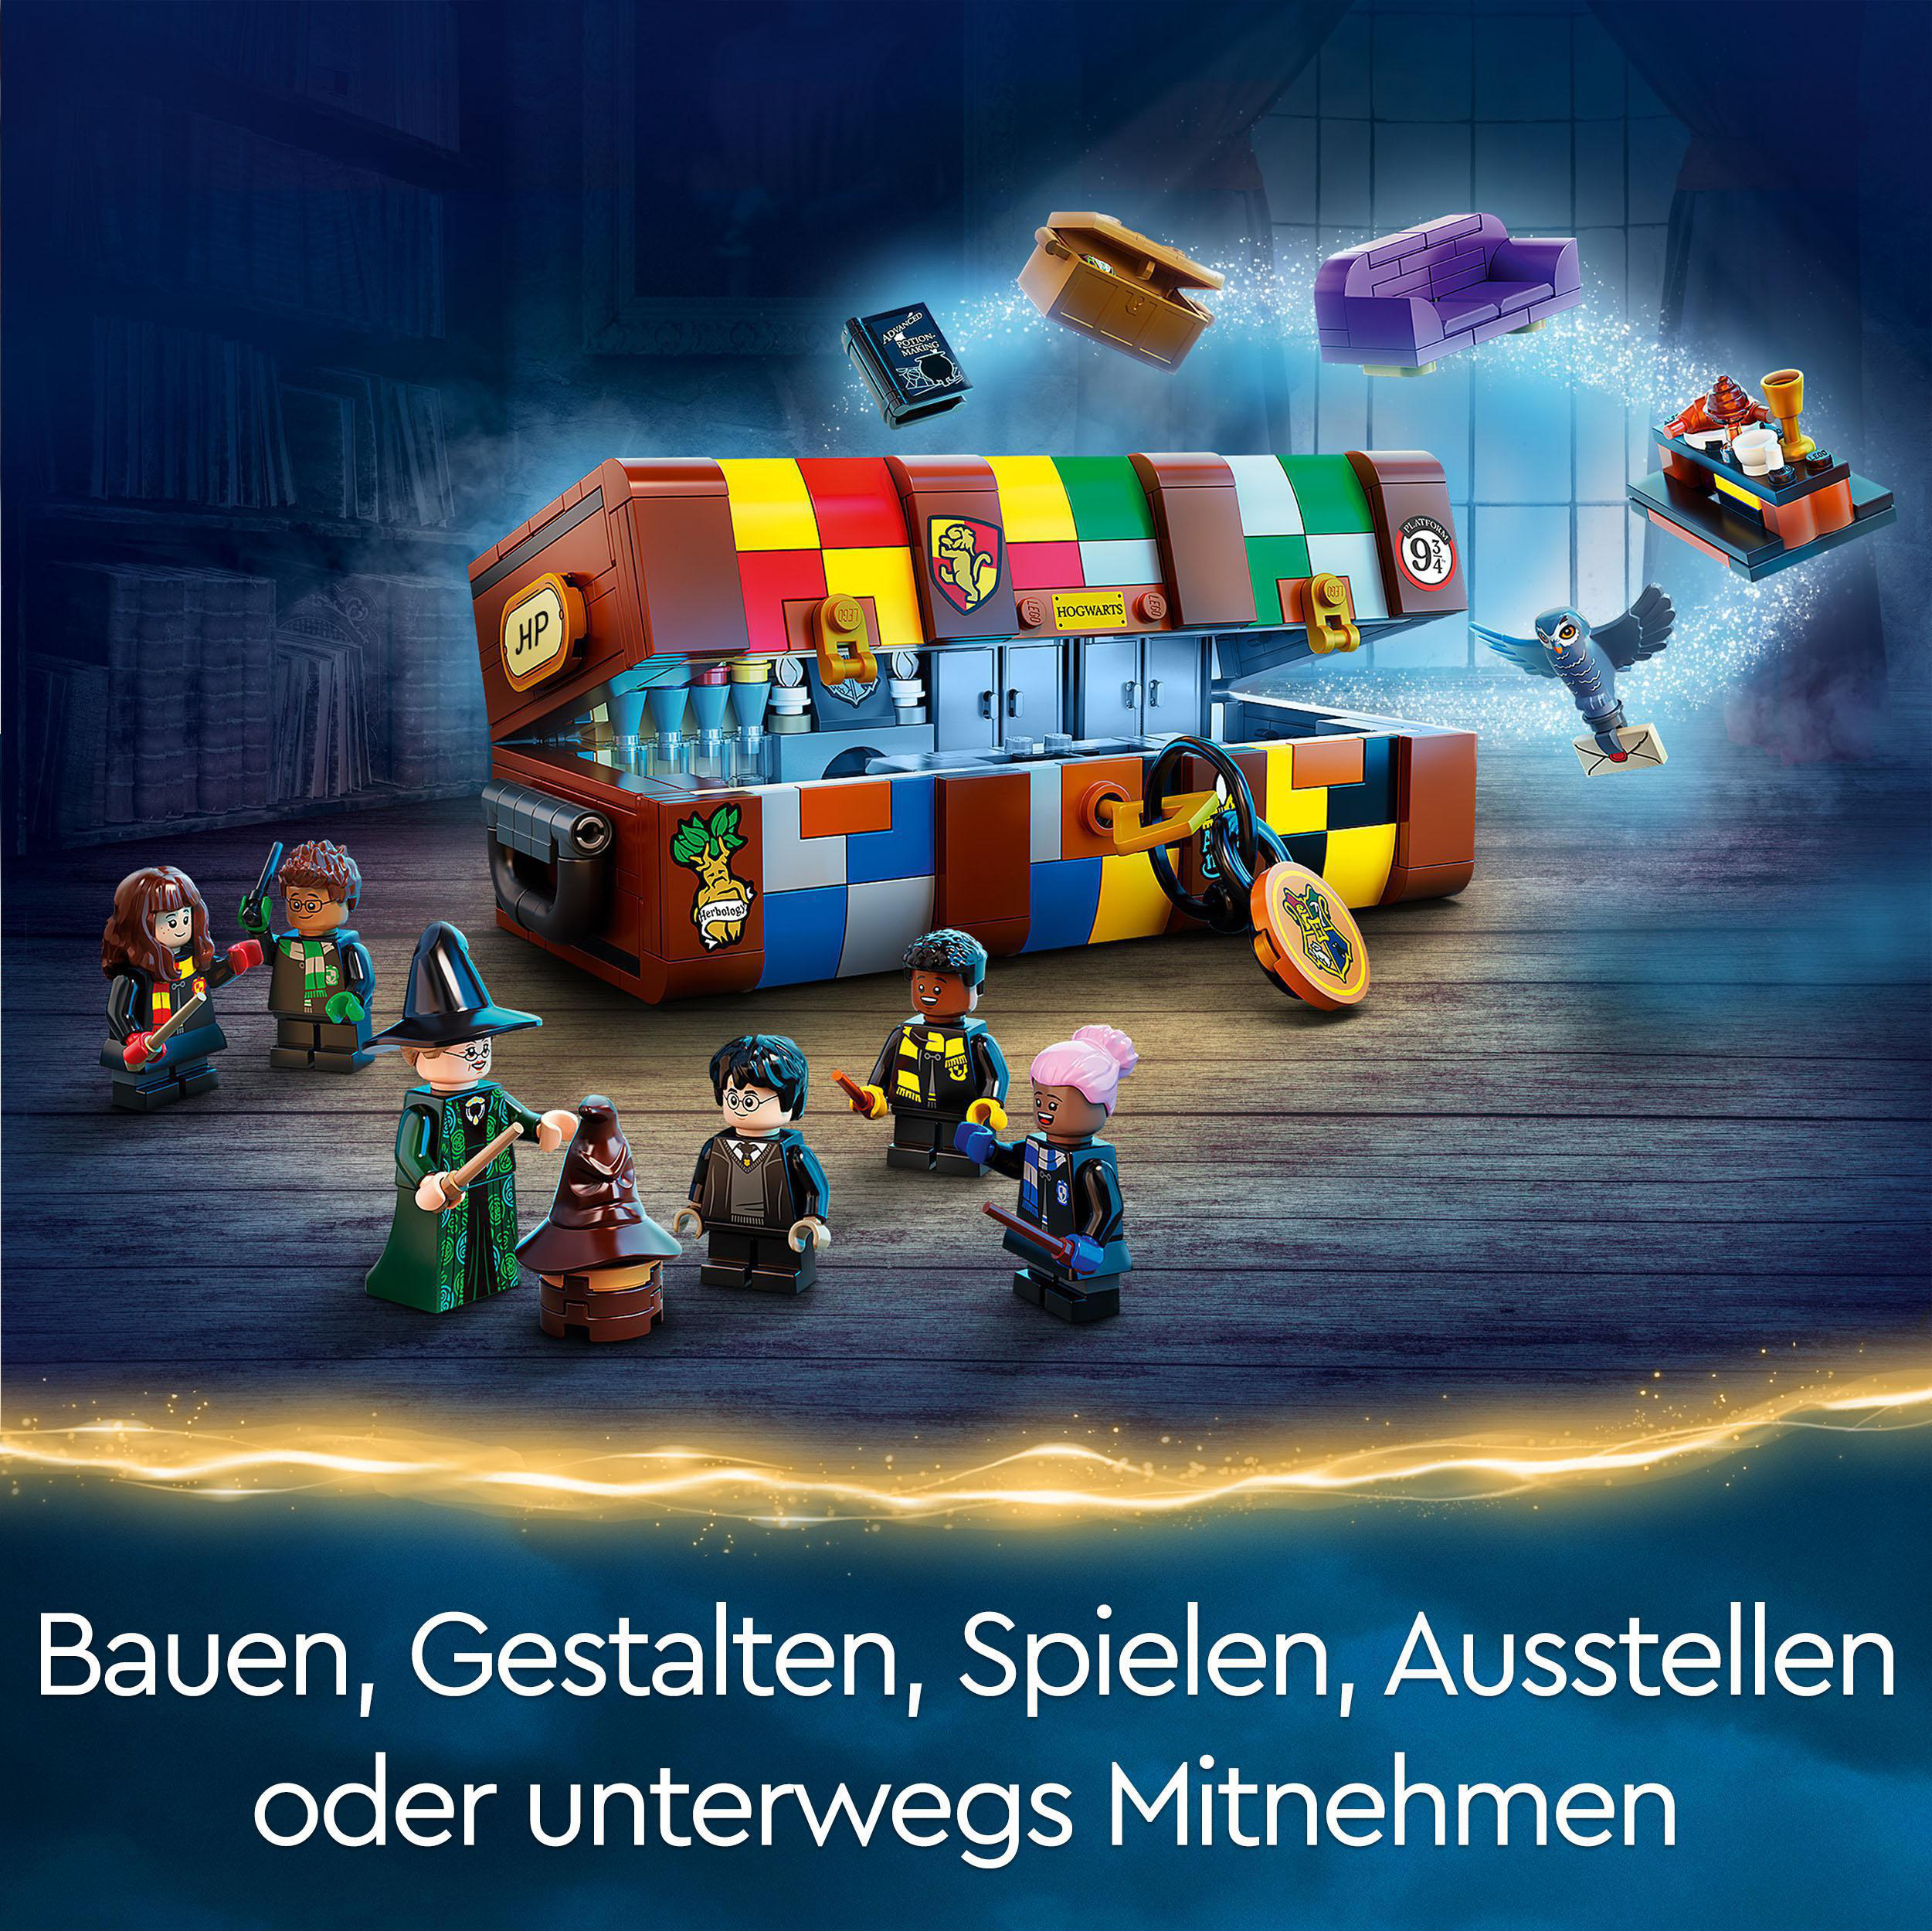 Bausatz, Potter 76399 LEGO Zauberkoffer Mehrfarbig Harry Hogwarts™